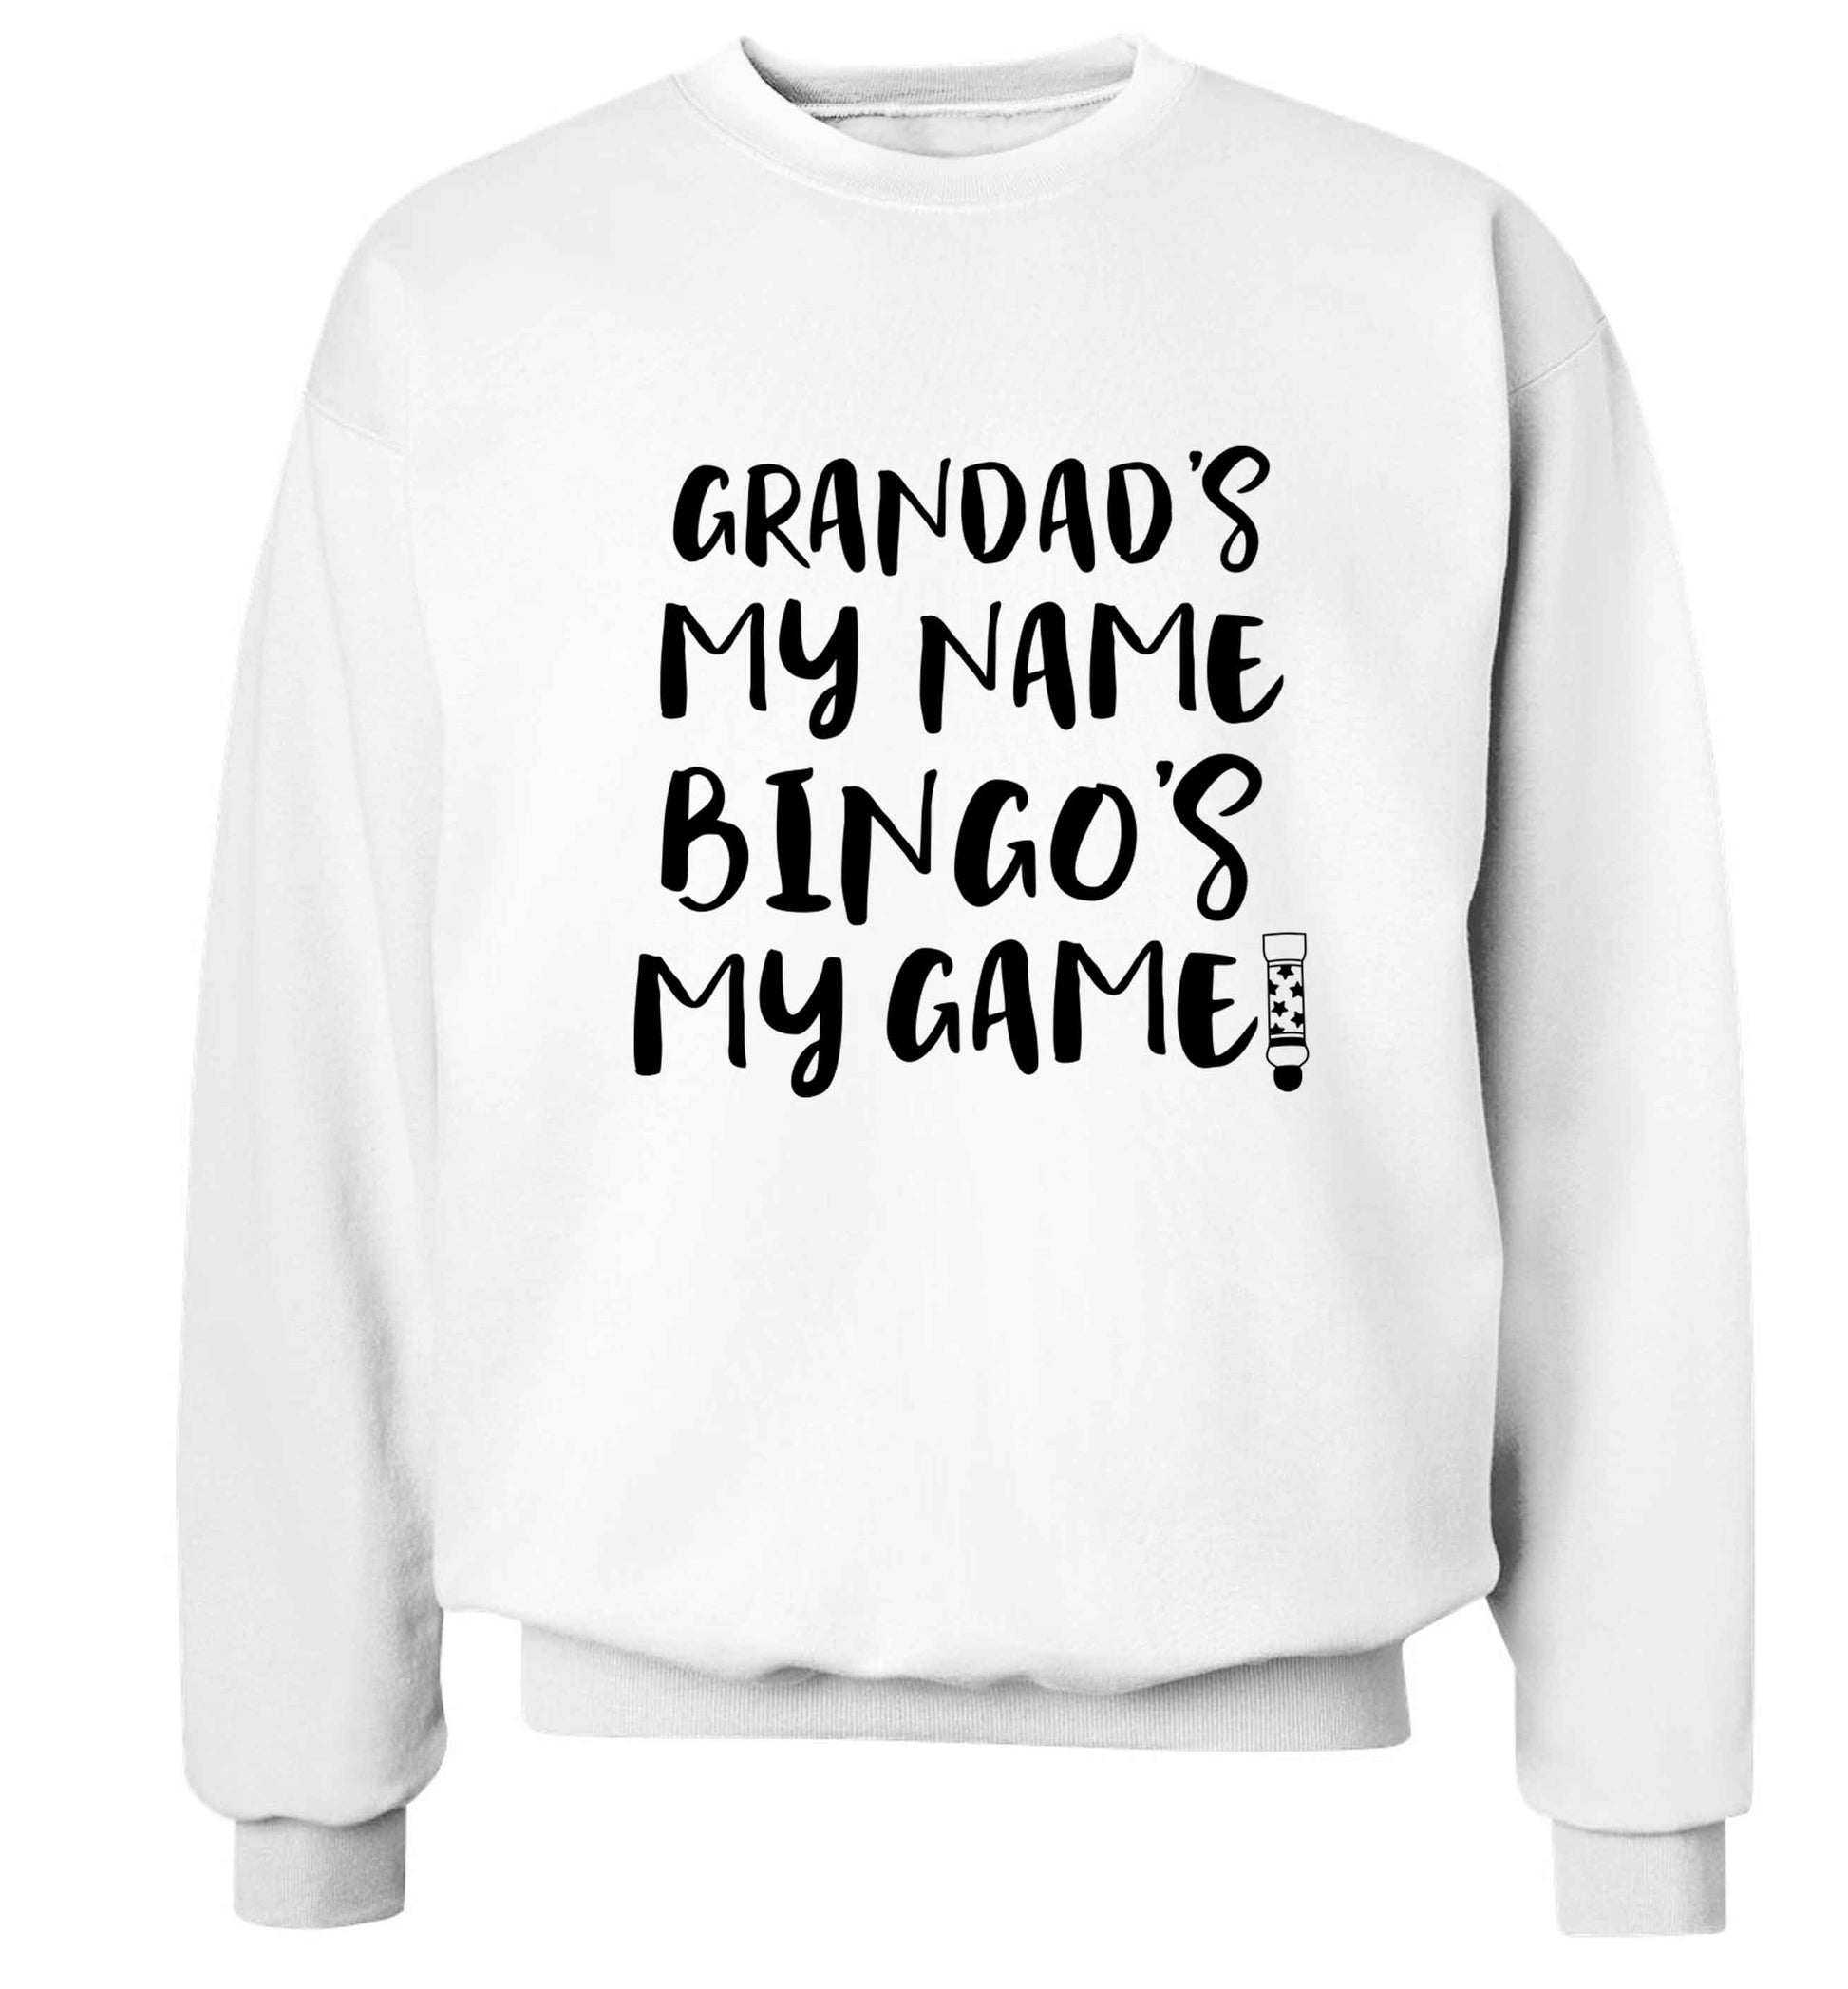 Grandad's my name bingo's my game! Adult's unisex white Sweater 2XL